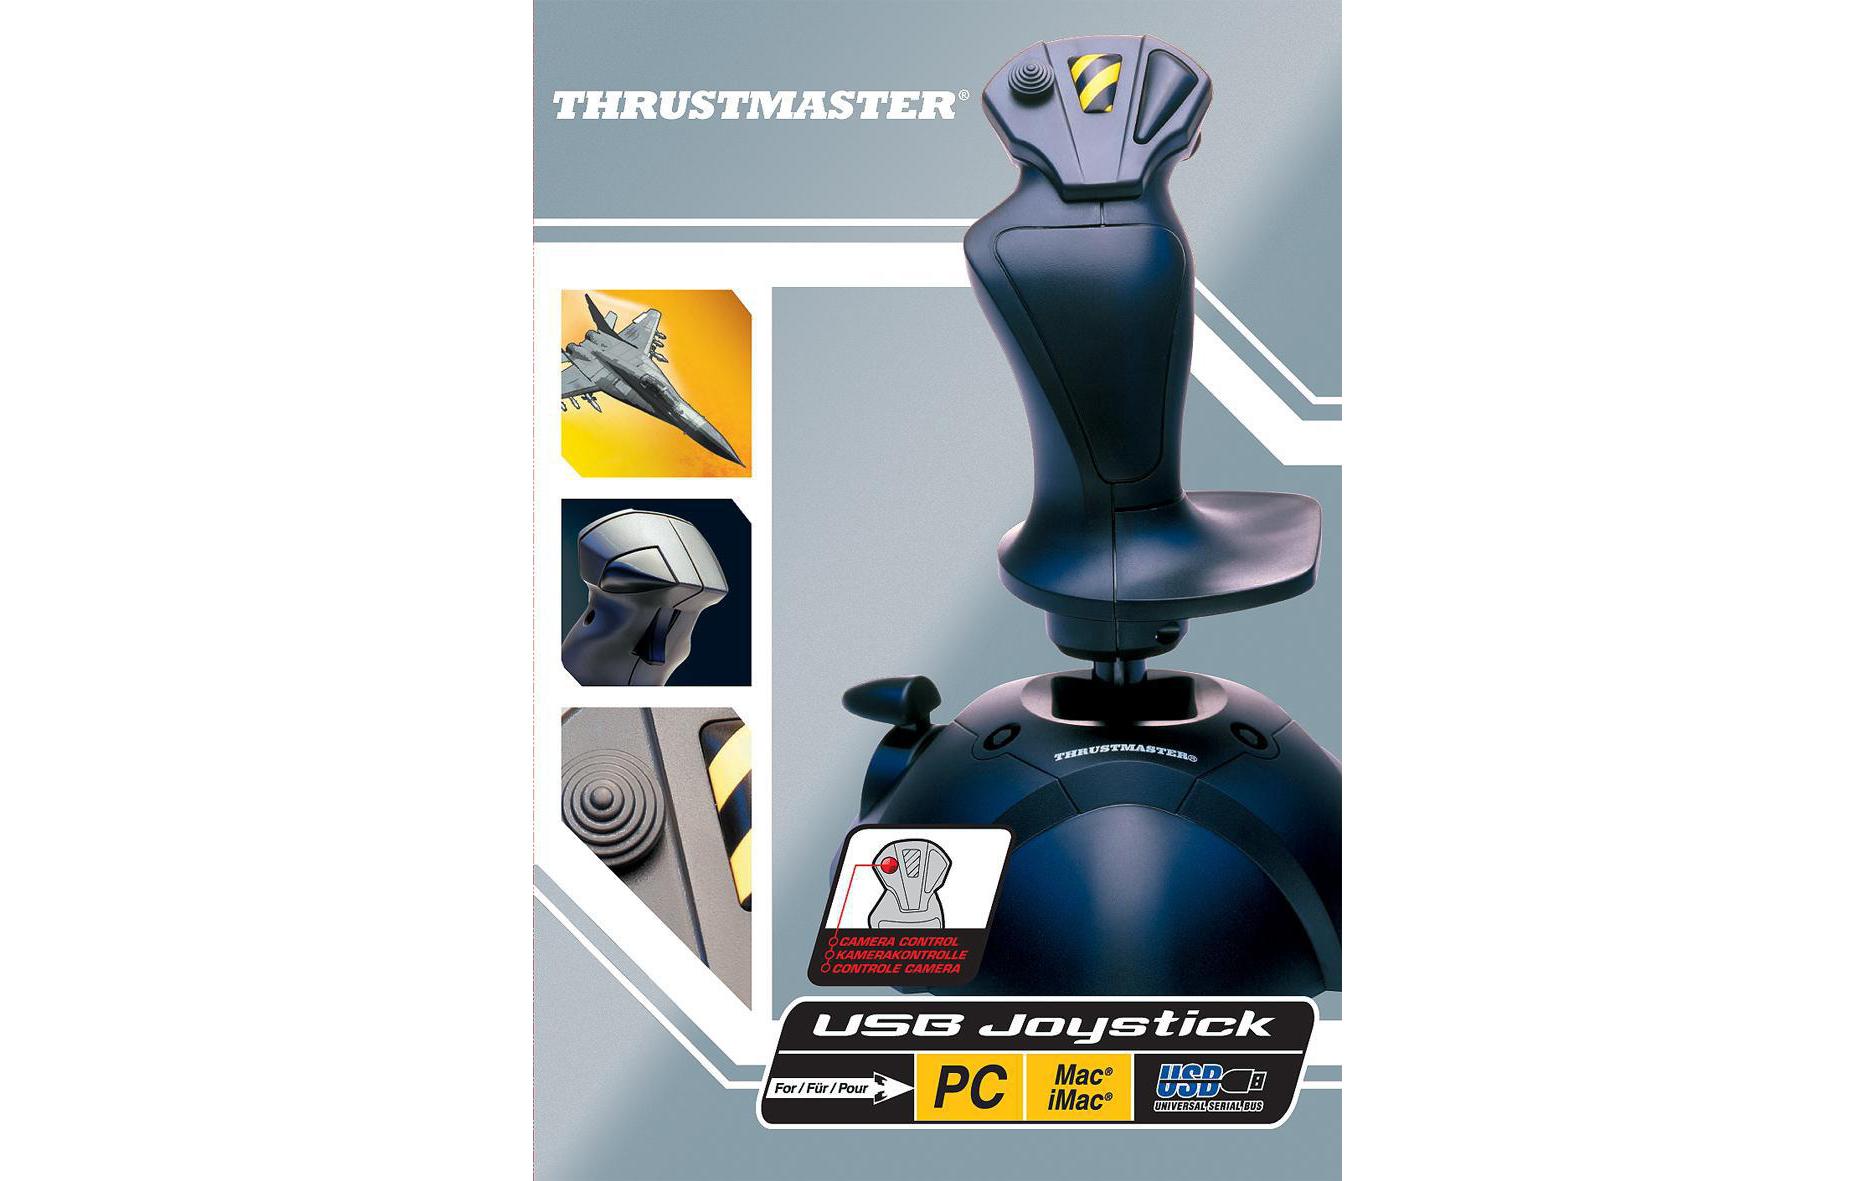 Thrustmaster USB JOYSTICK for PC.